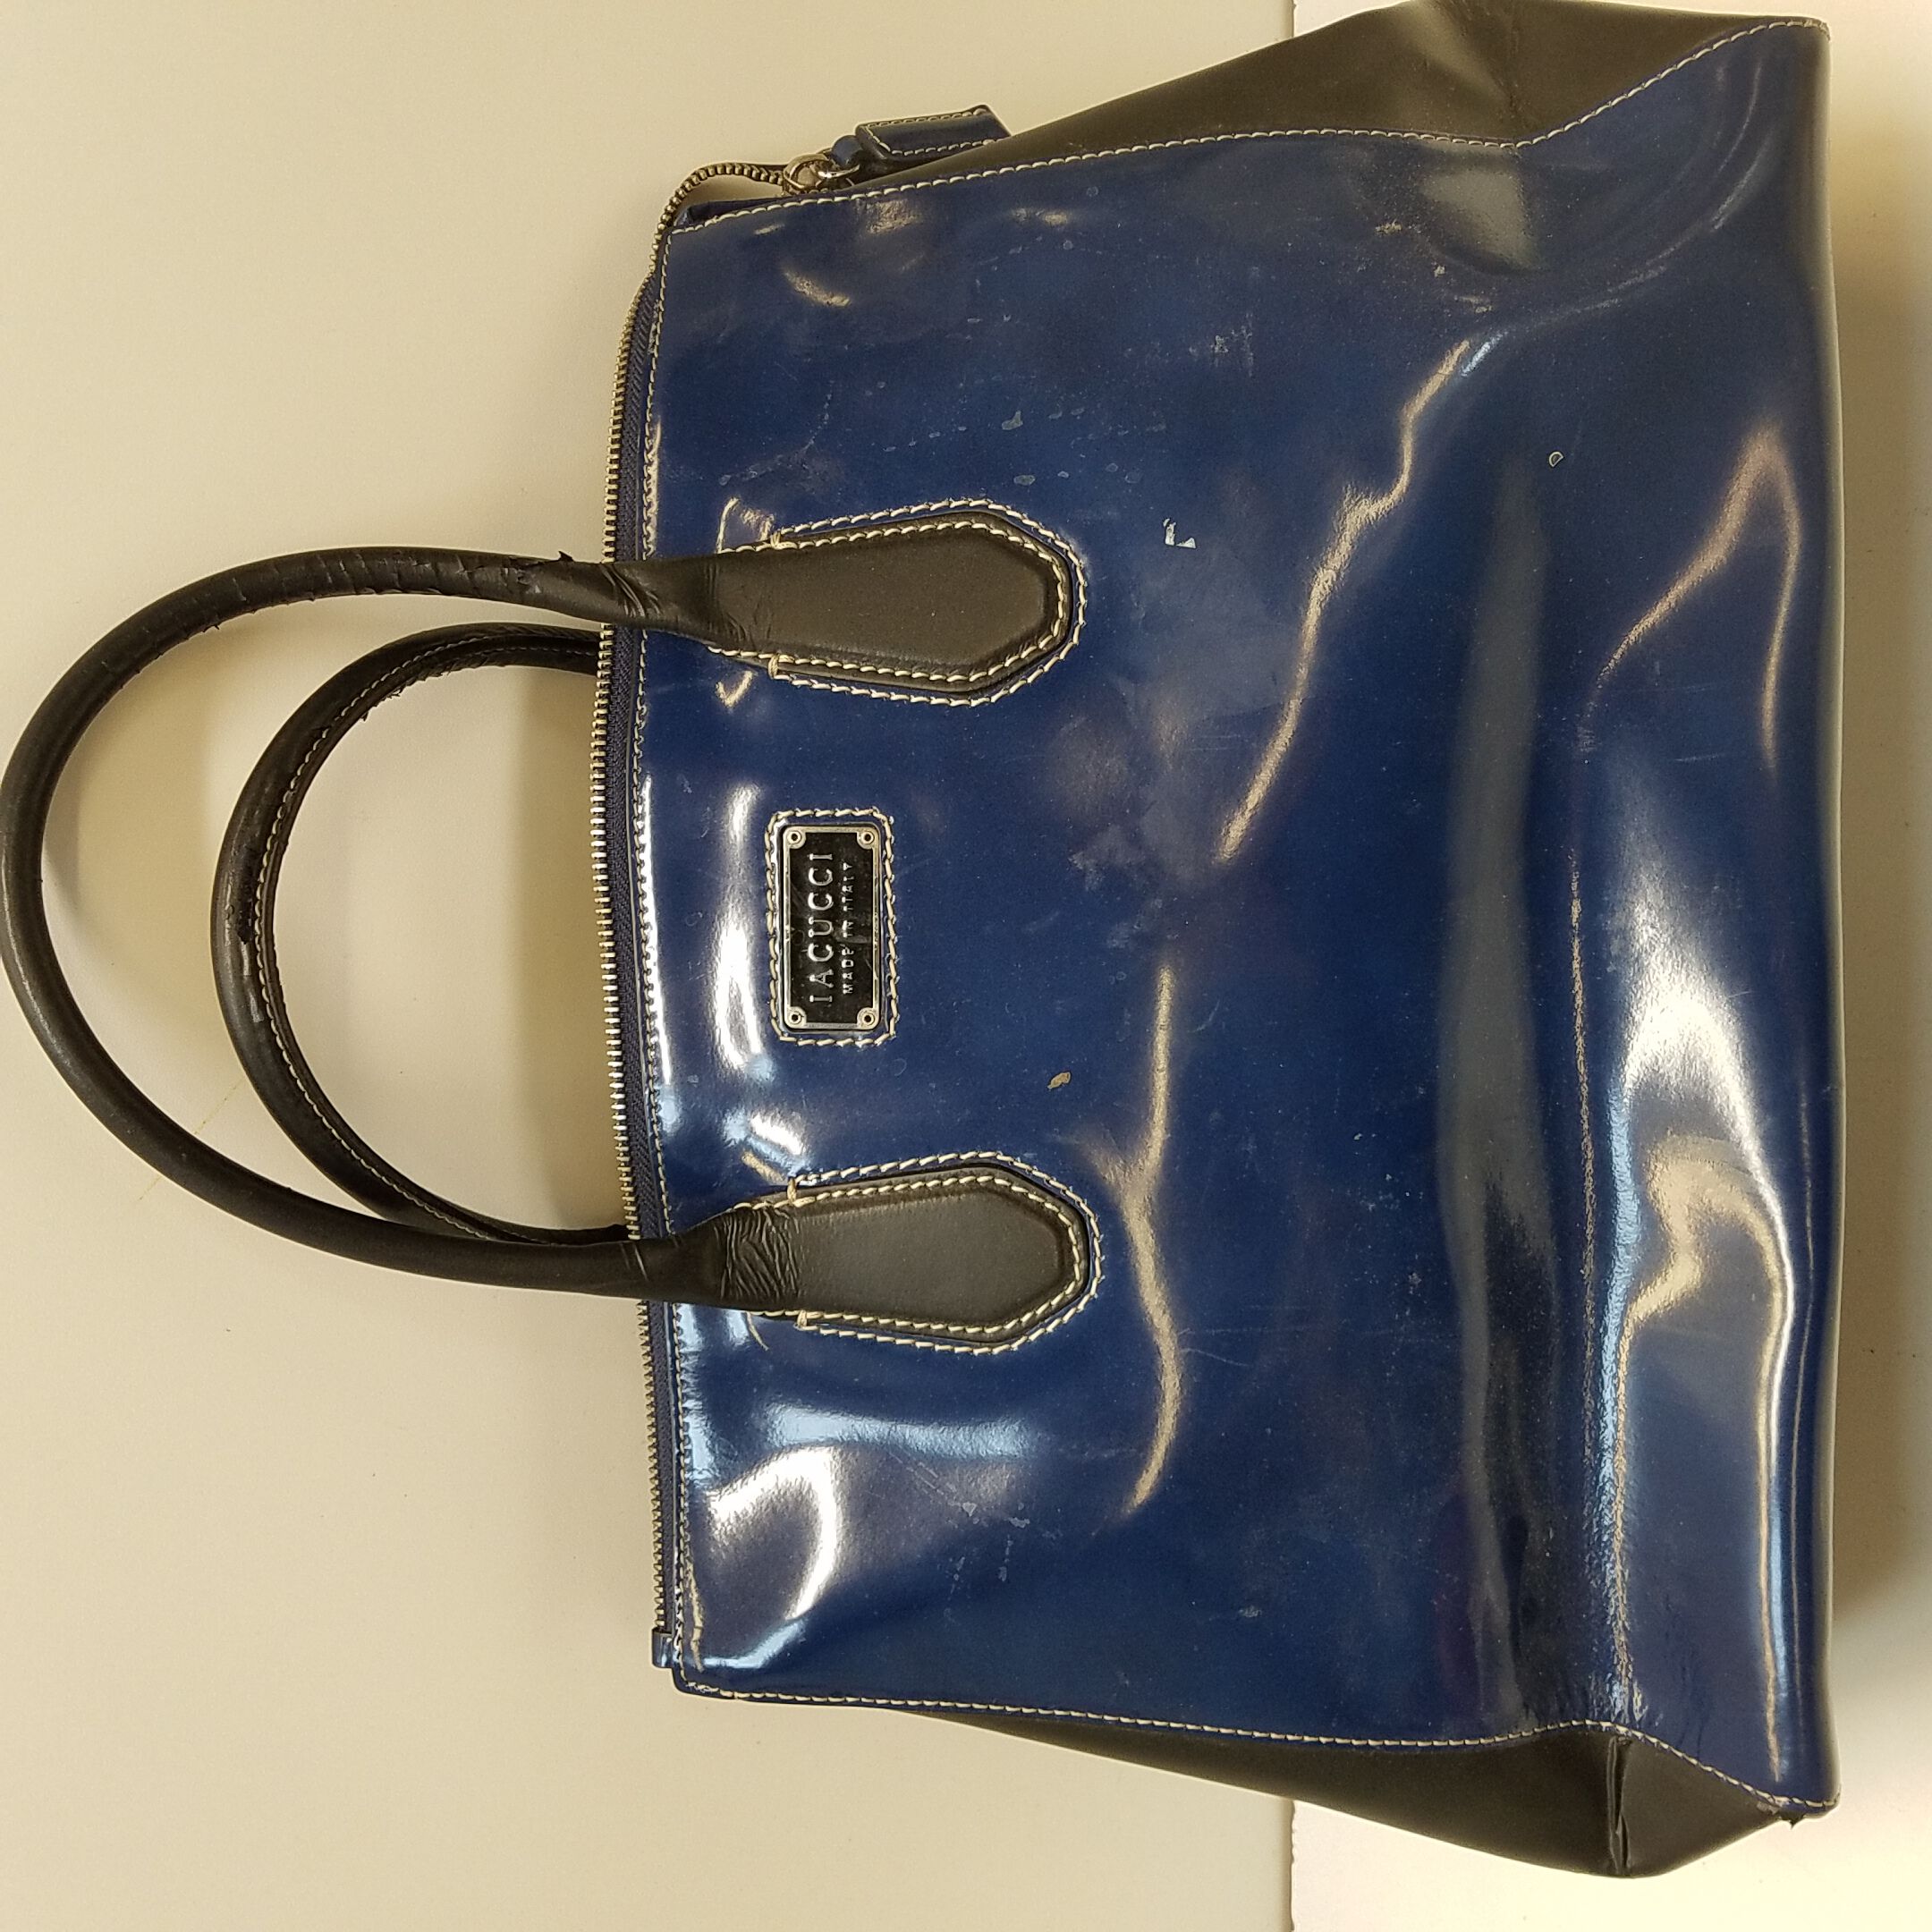 Stylish womens clutch wallet purse for girls Navy blue faux leather handbag  WRCL NAVY BLUE 502